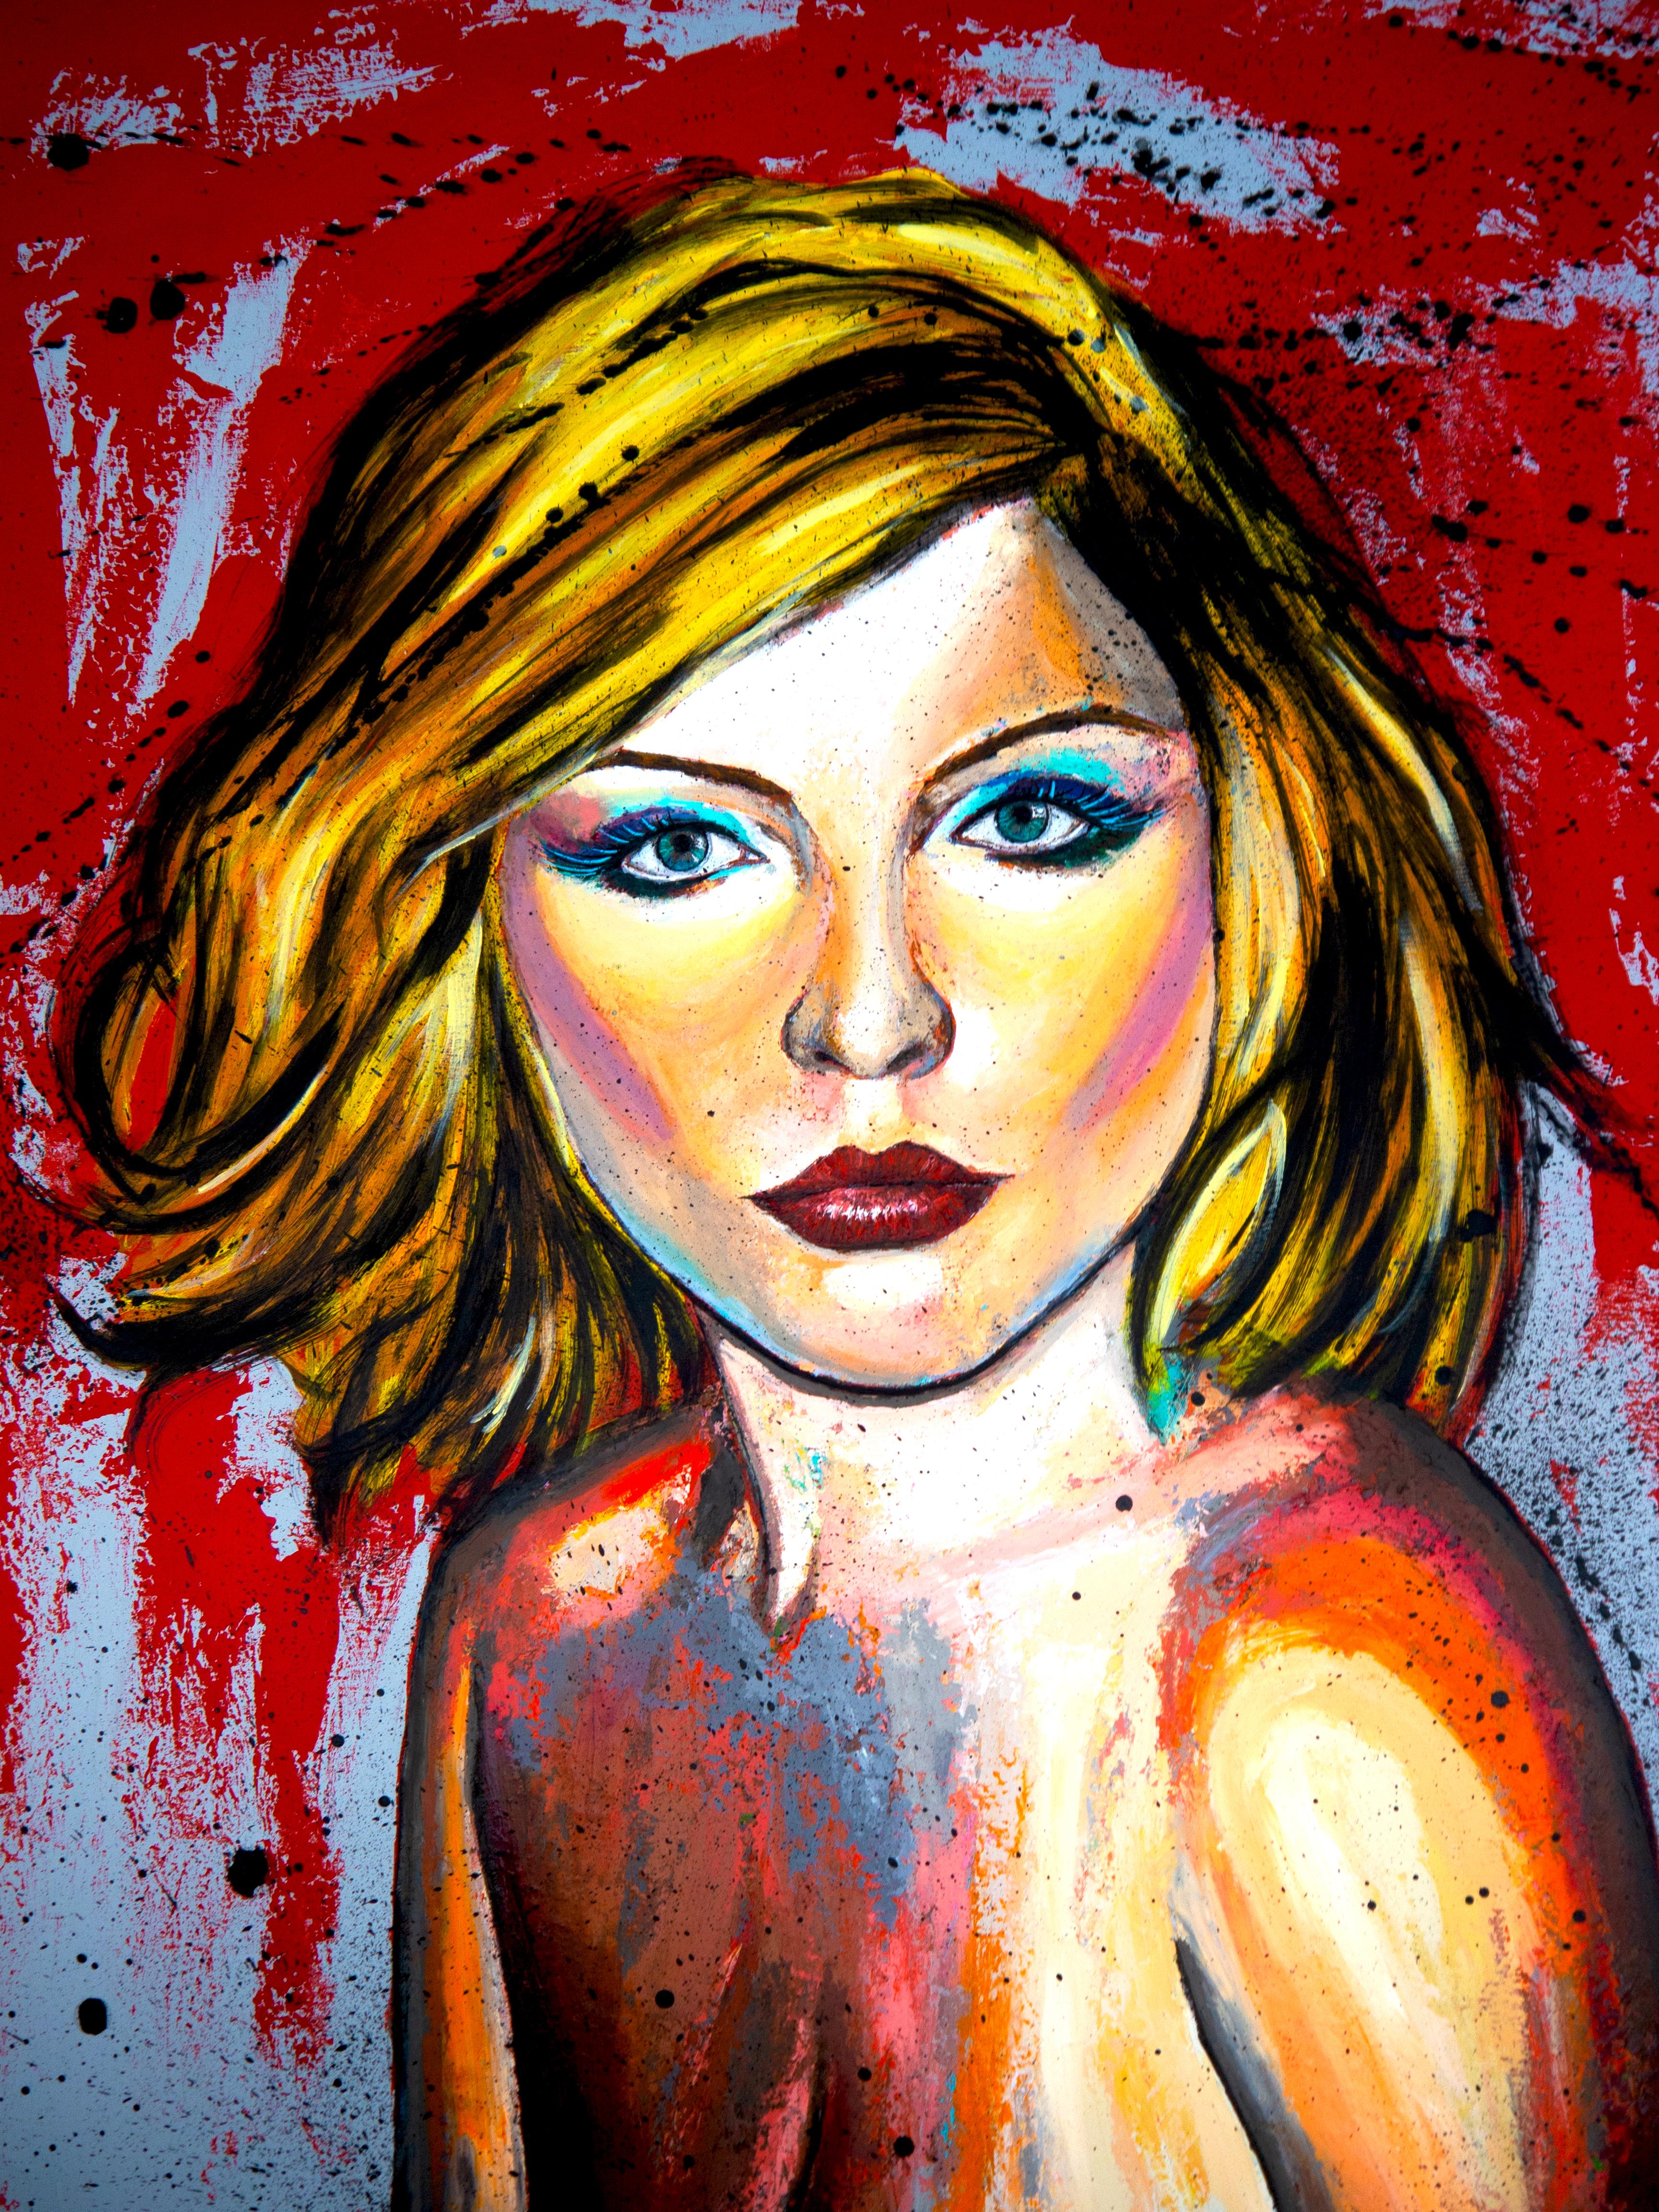 French School - Portrait PS 93 Debbie Blondie - (XL Large) Post Impressionist